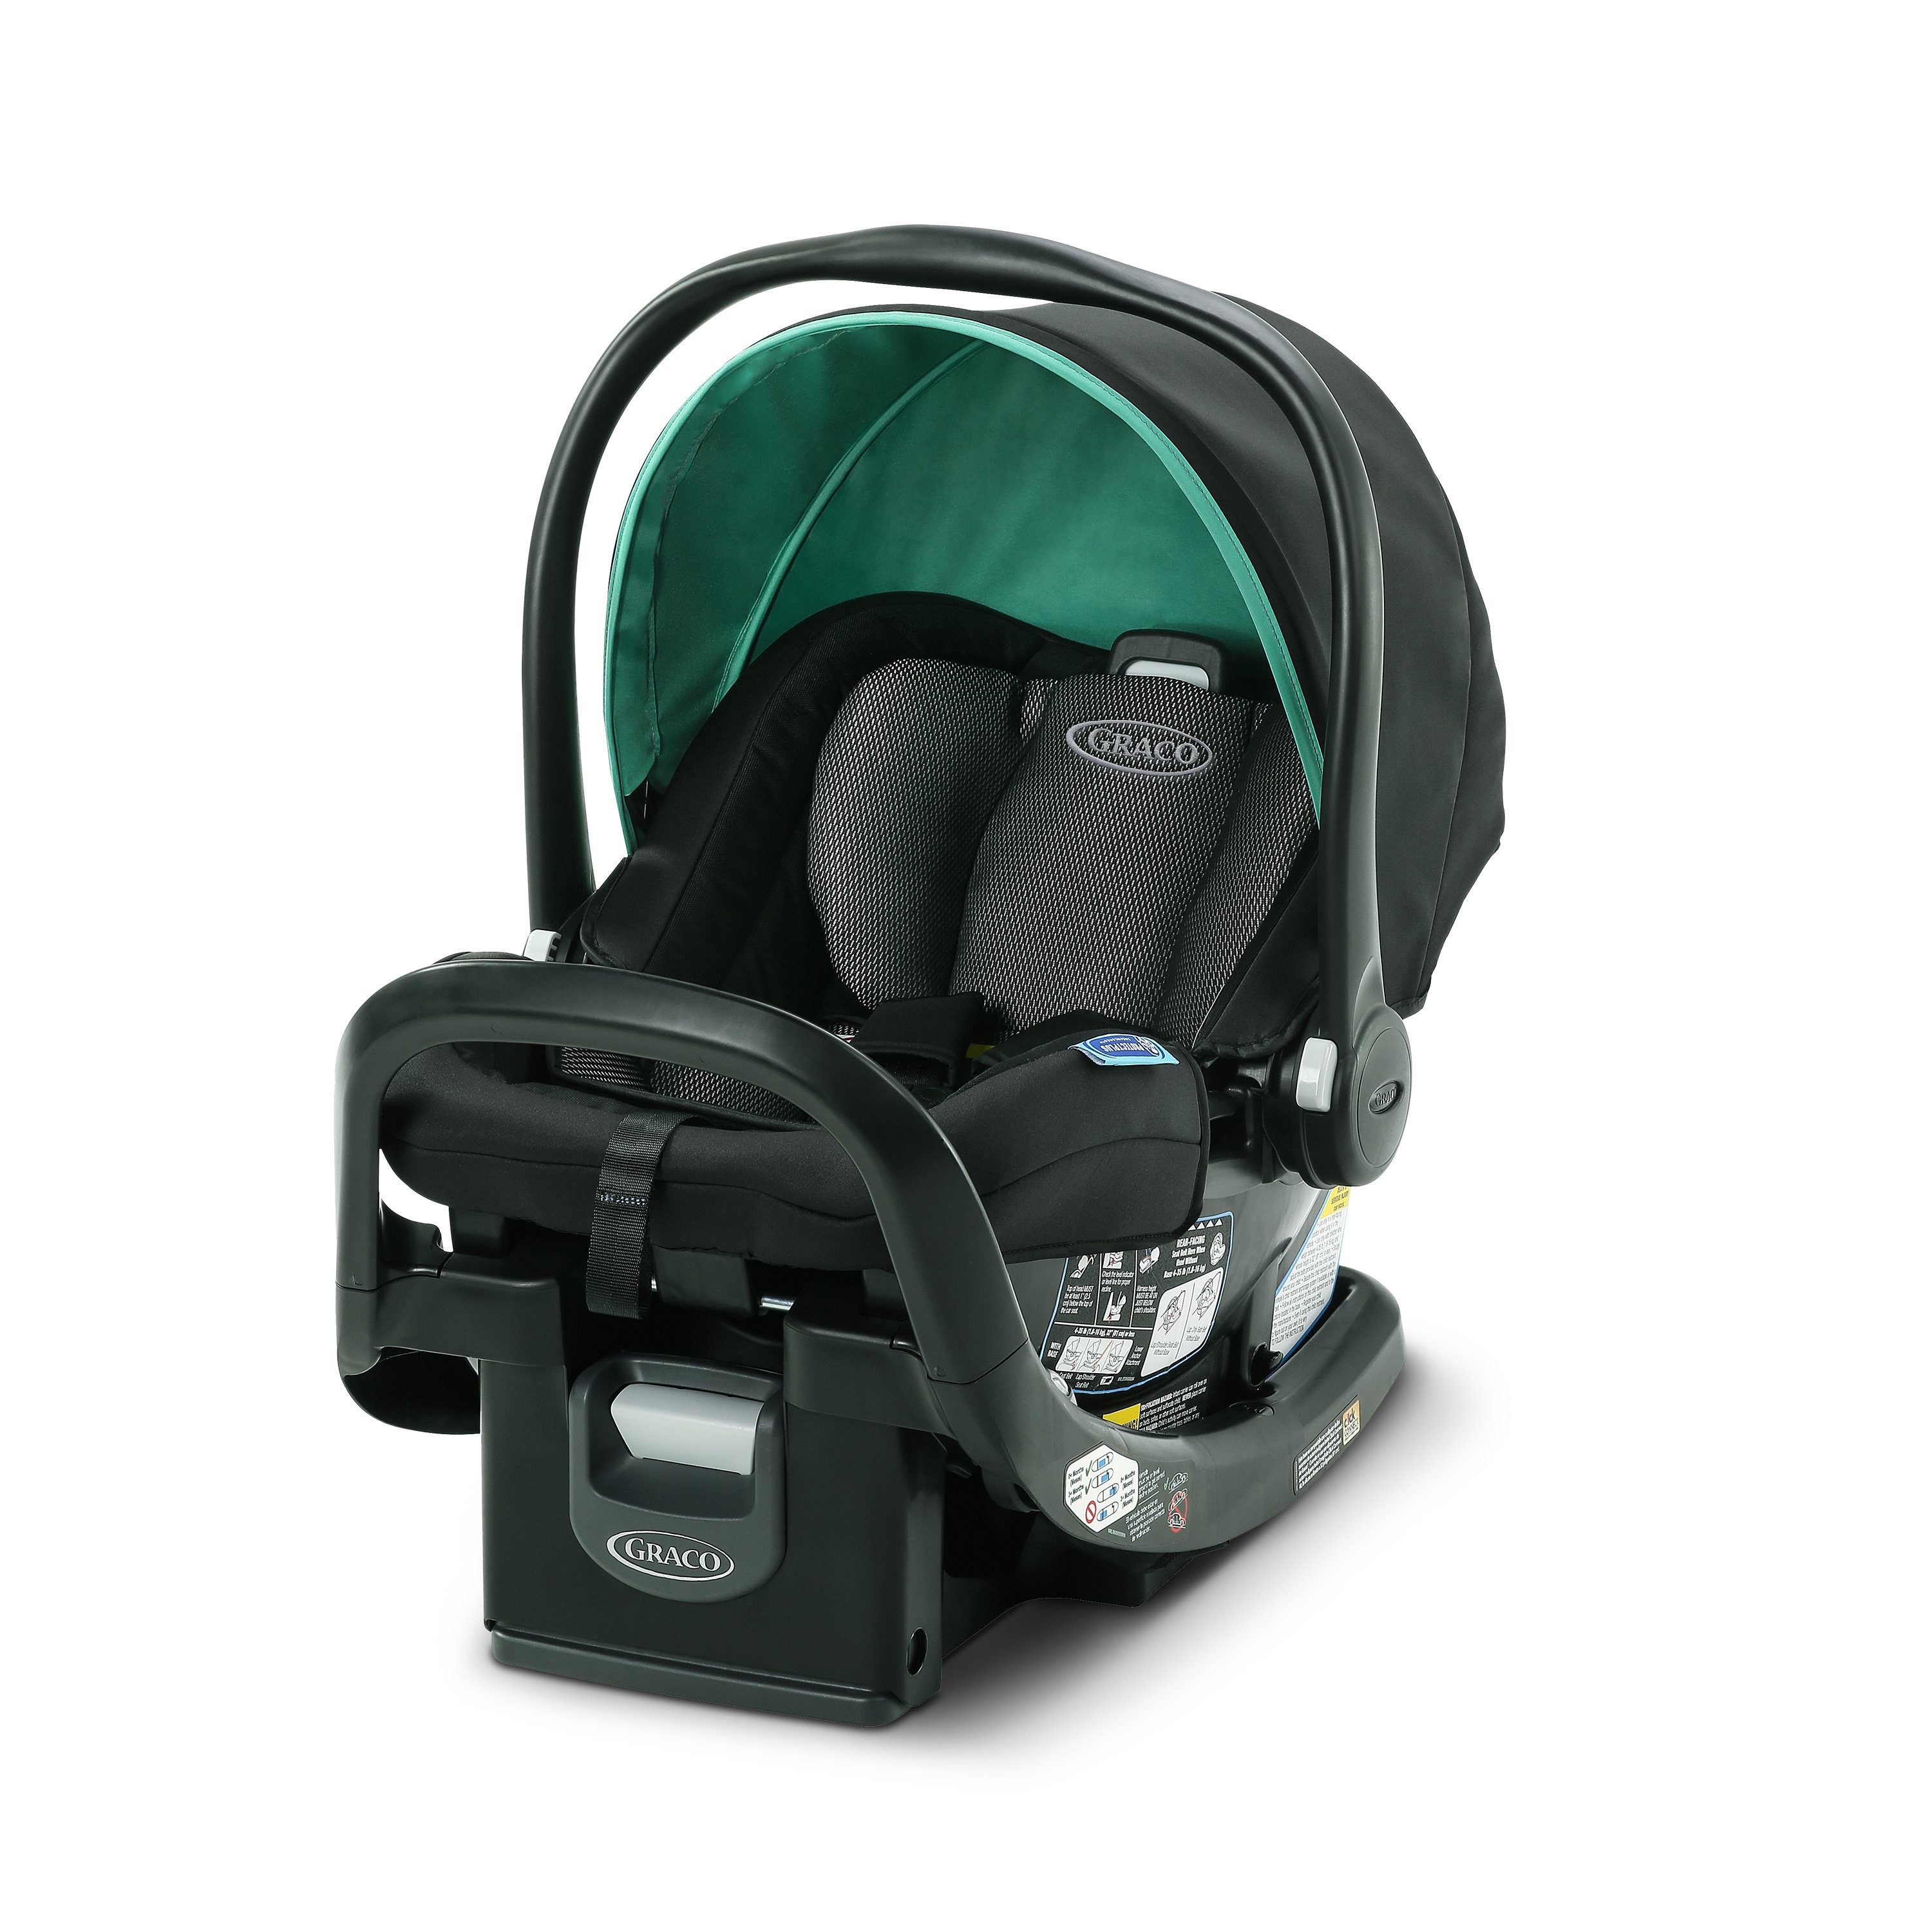 Graco Snugride Snugfit 35 Infant Car, Graco Snugride 35 Platinum Infant Car Seat Featuring Trueshield Ion